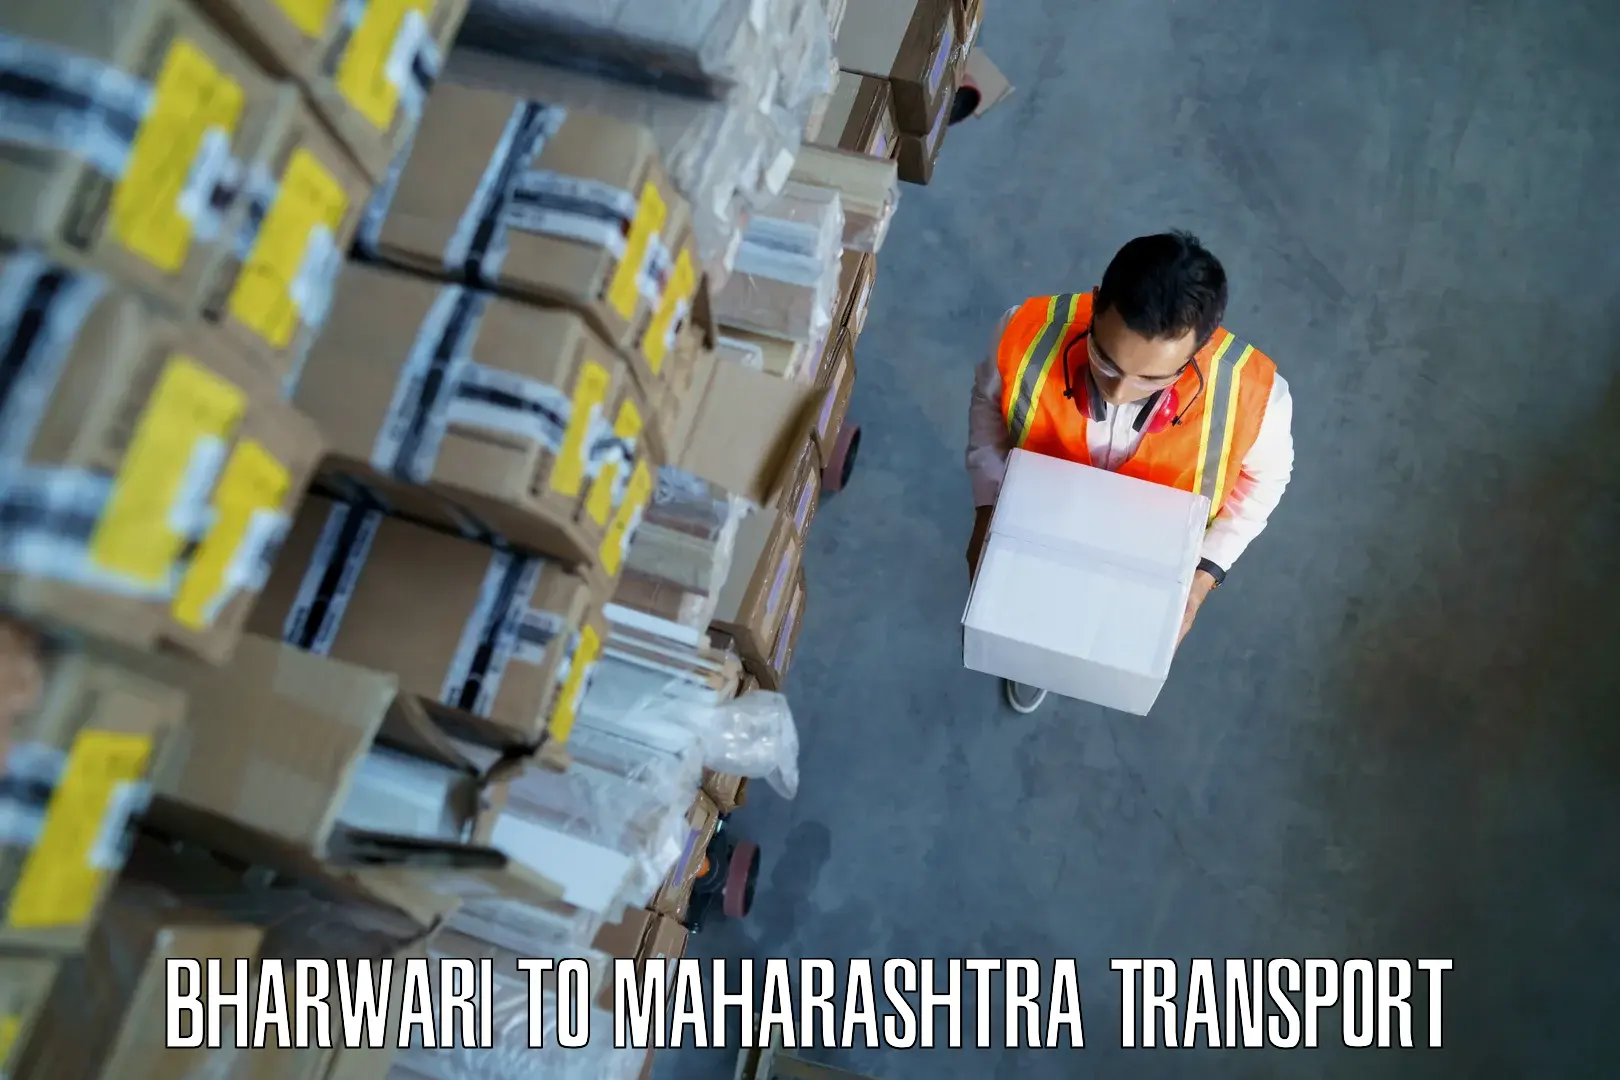 Truck transport companies in India Bharwari to Mudal